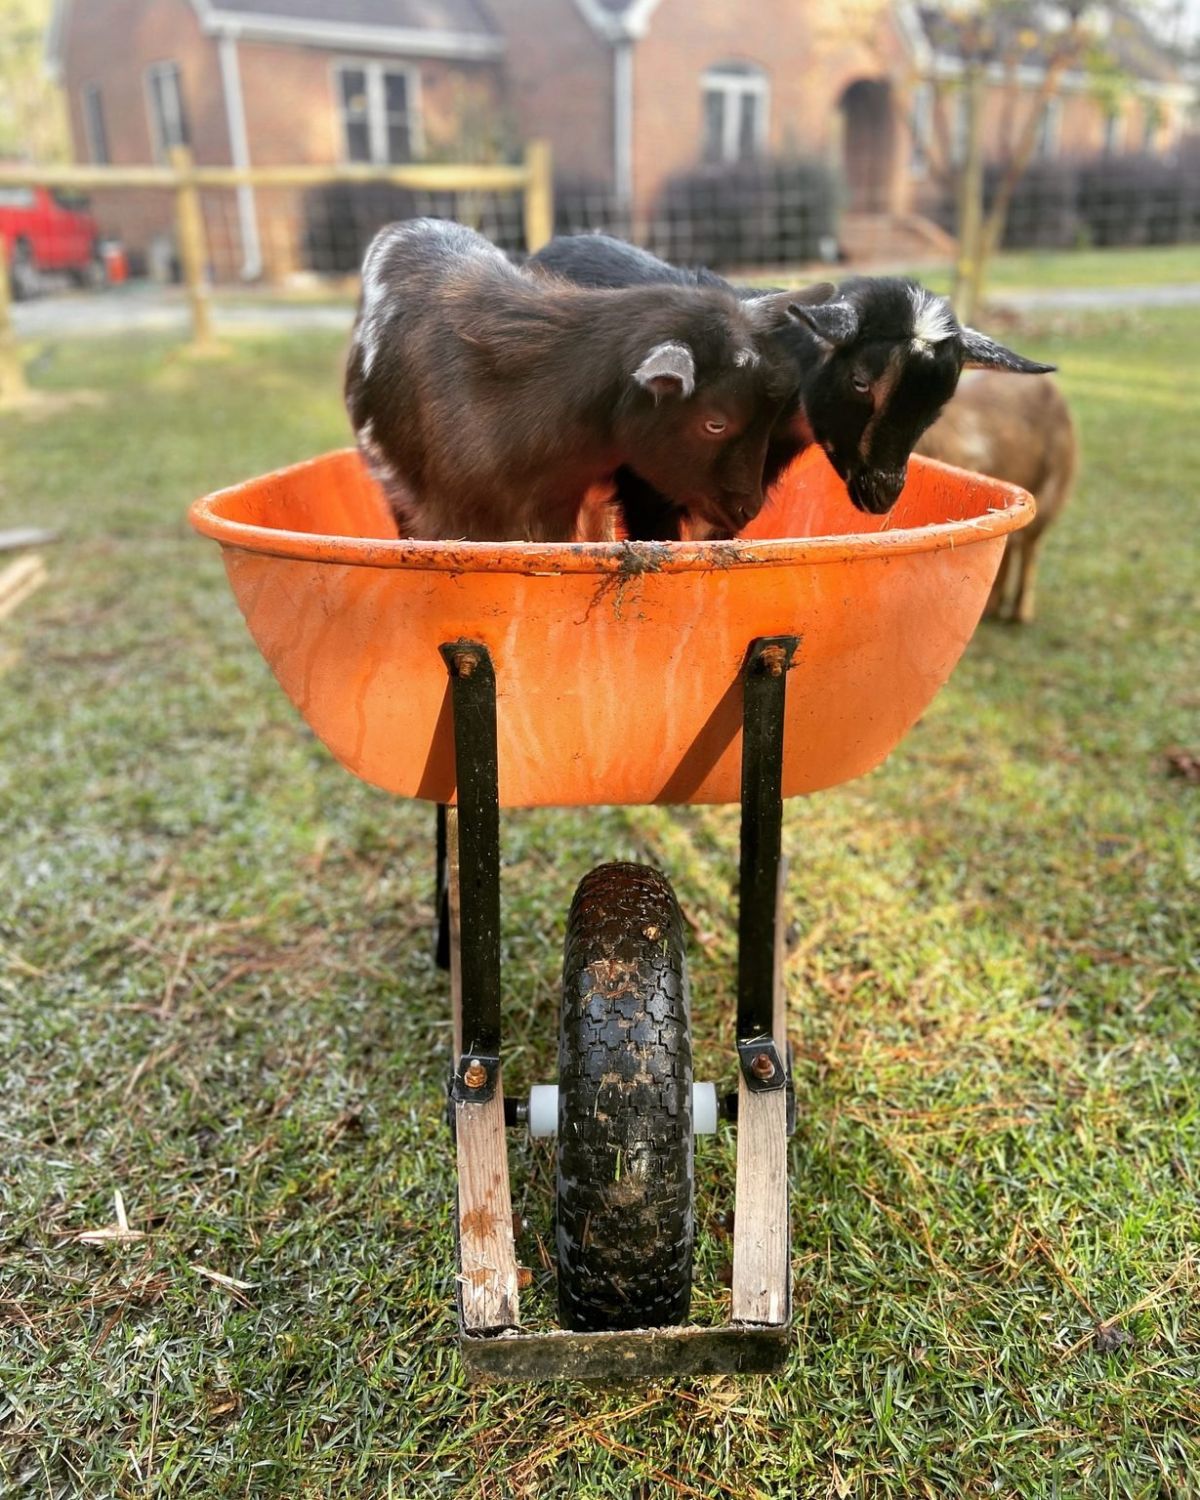 2 brown and black baby goats in an orange wheelbarrow